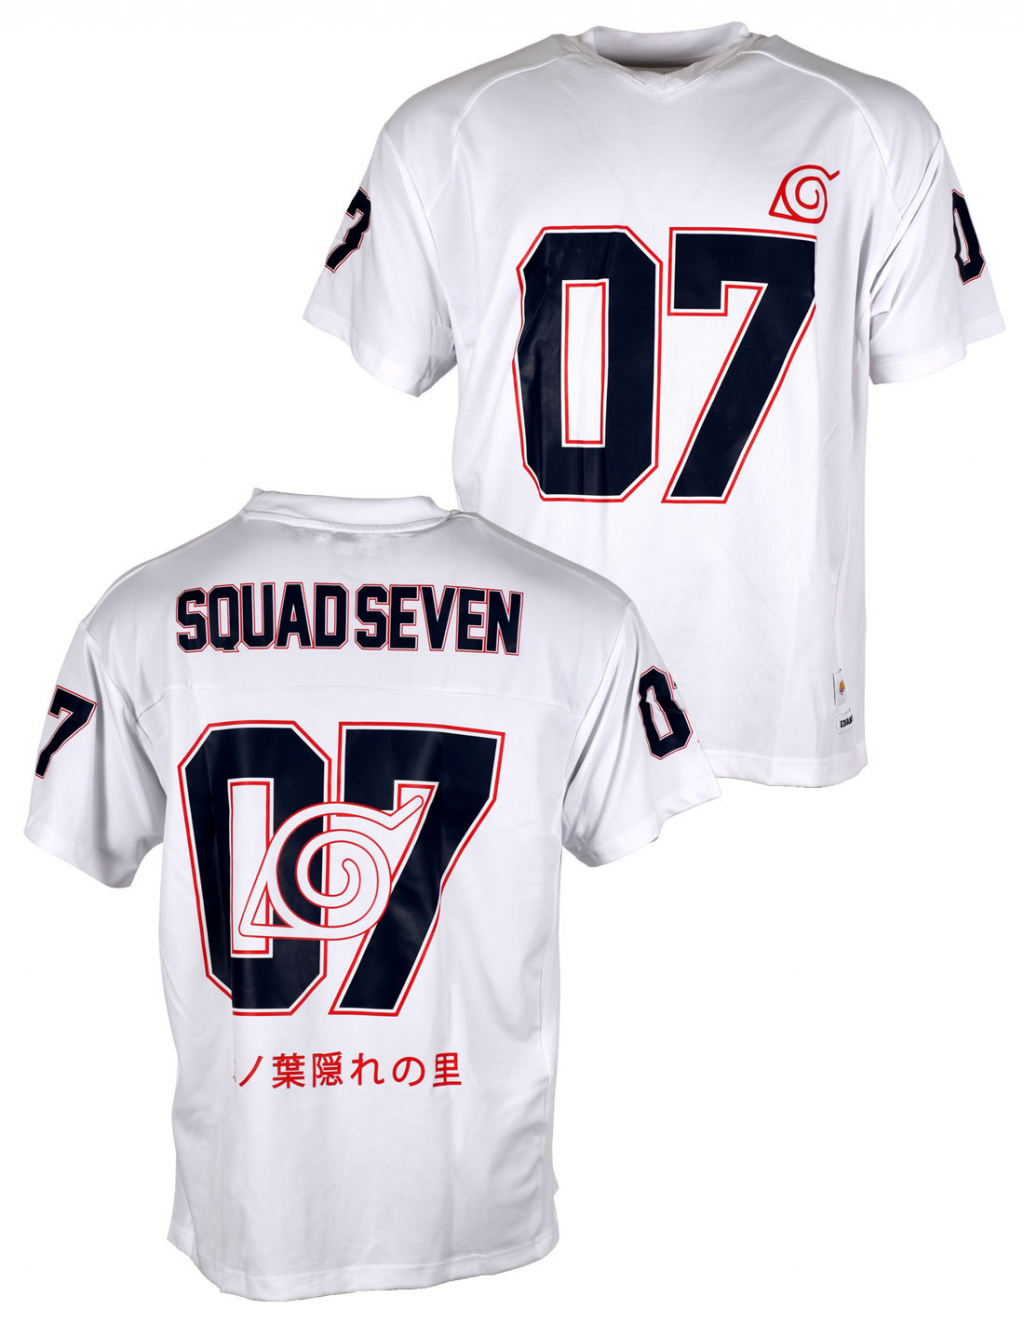 NARUTO - Squad Seven - T-Shirt Sports US Replica unisex (XL)